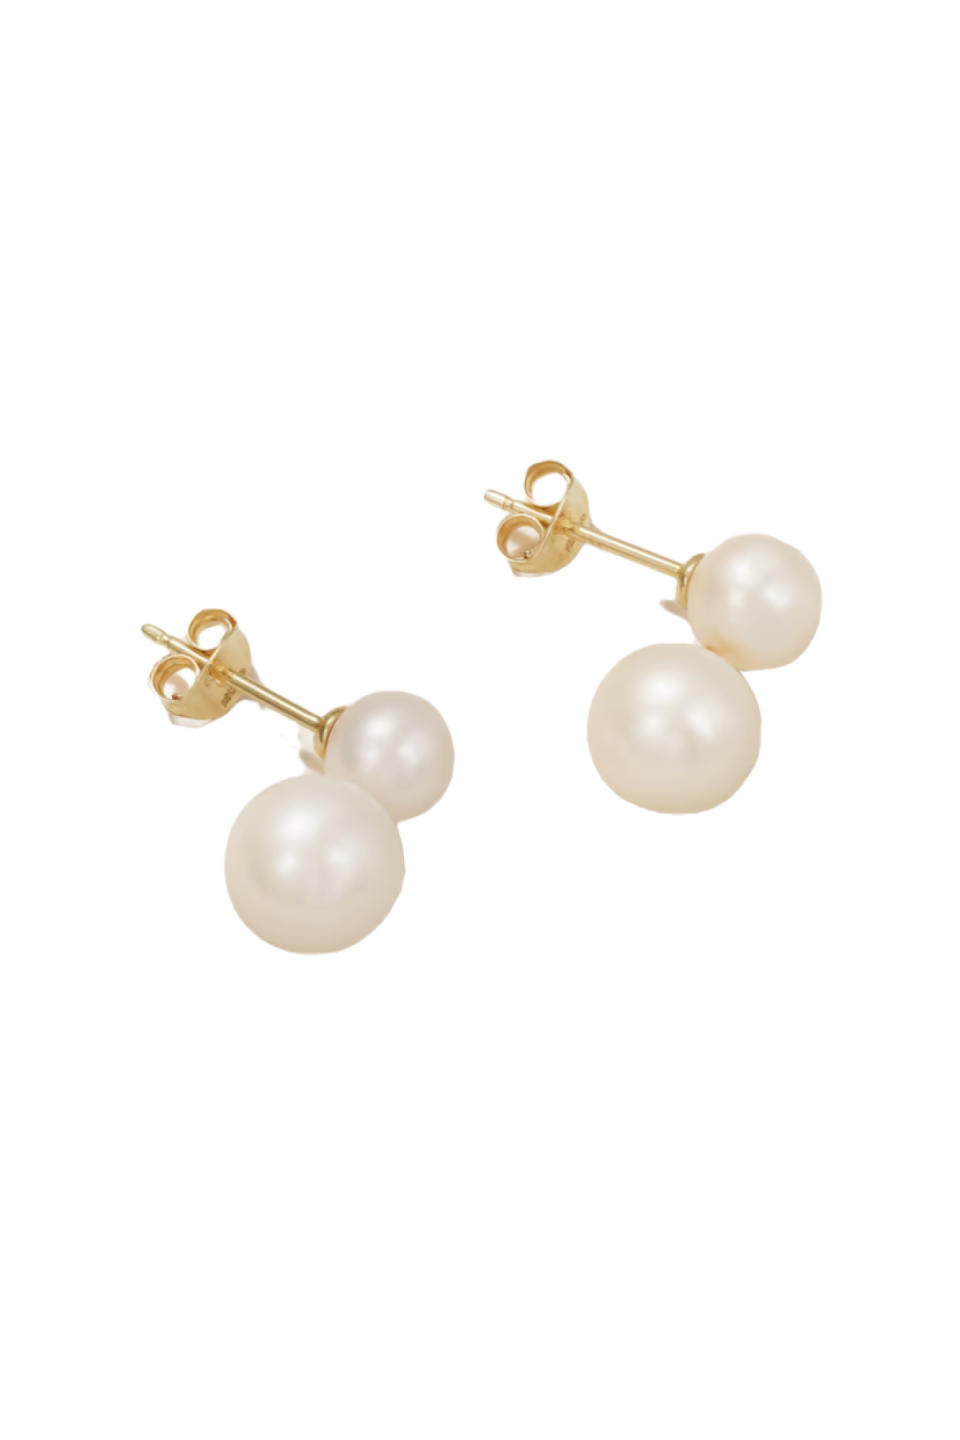 Mateo Duo 14-Karat Gold Pearl Earrings